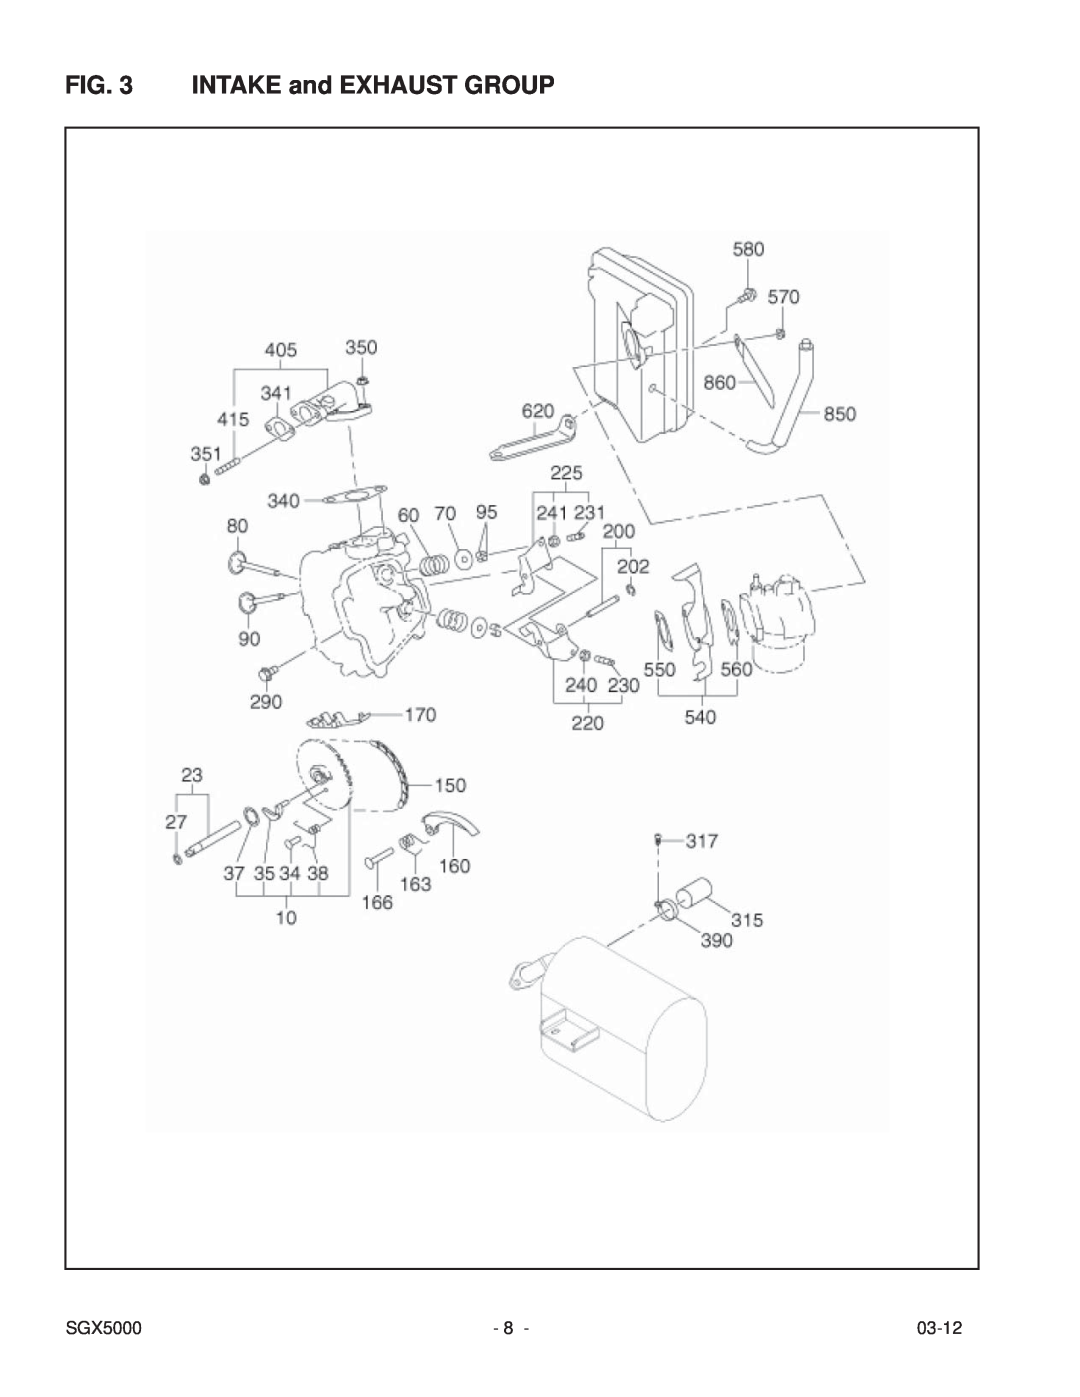 Subaru SGX5000 manual INTAKE and EXHAUST GROUP, 03-12 